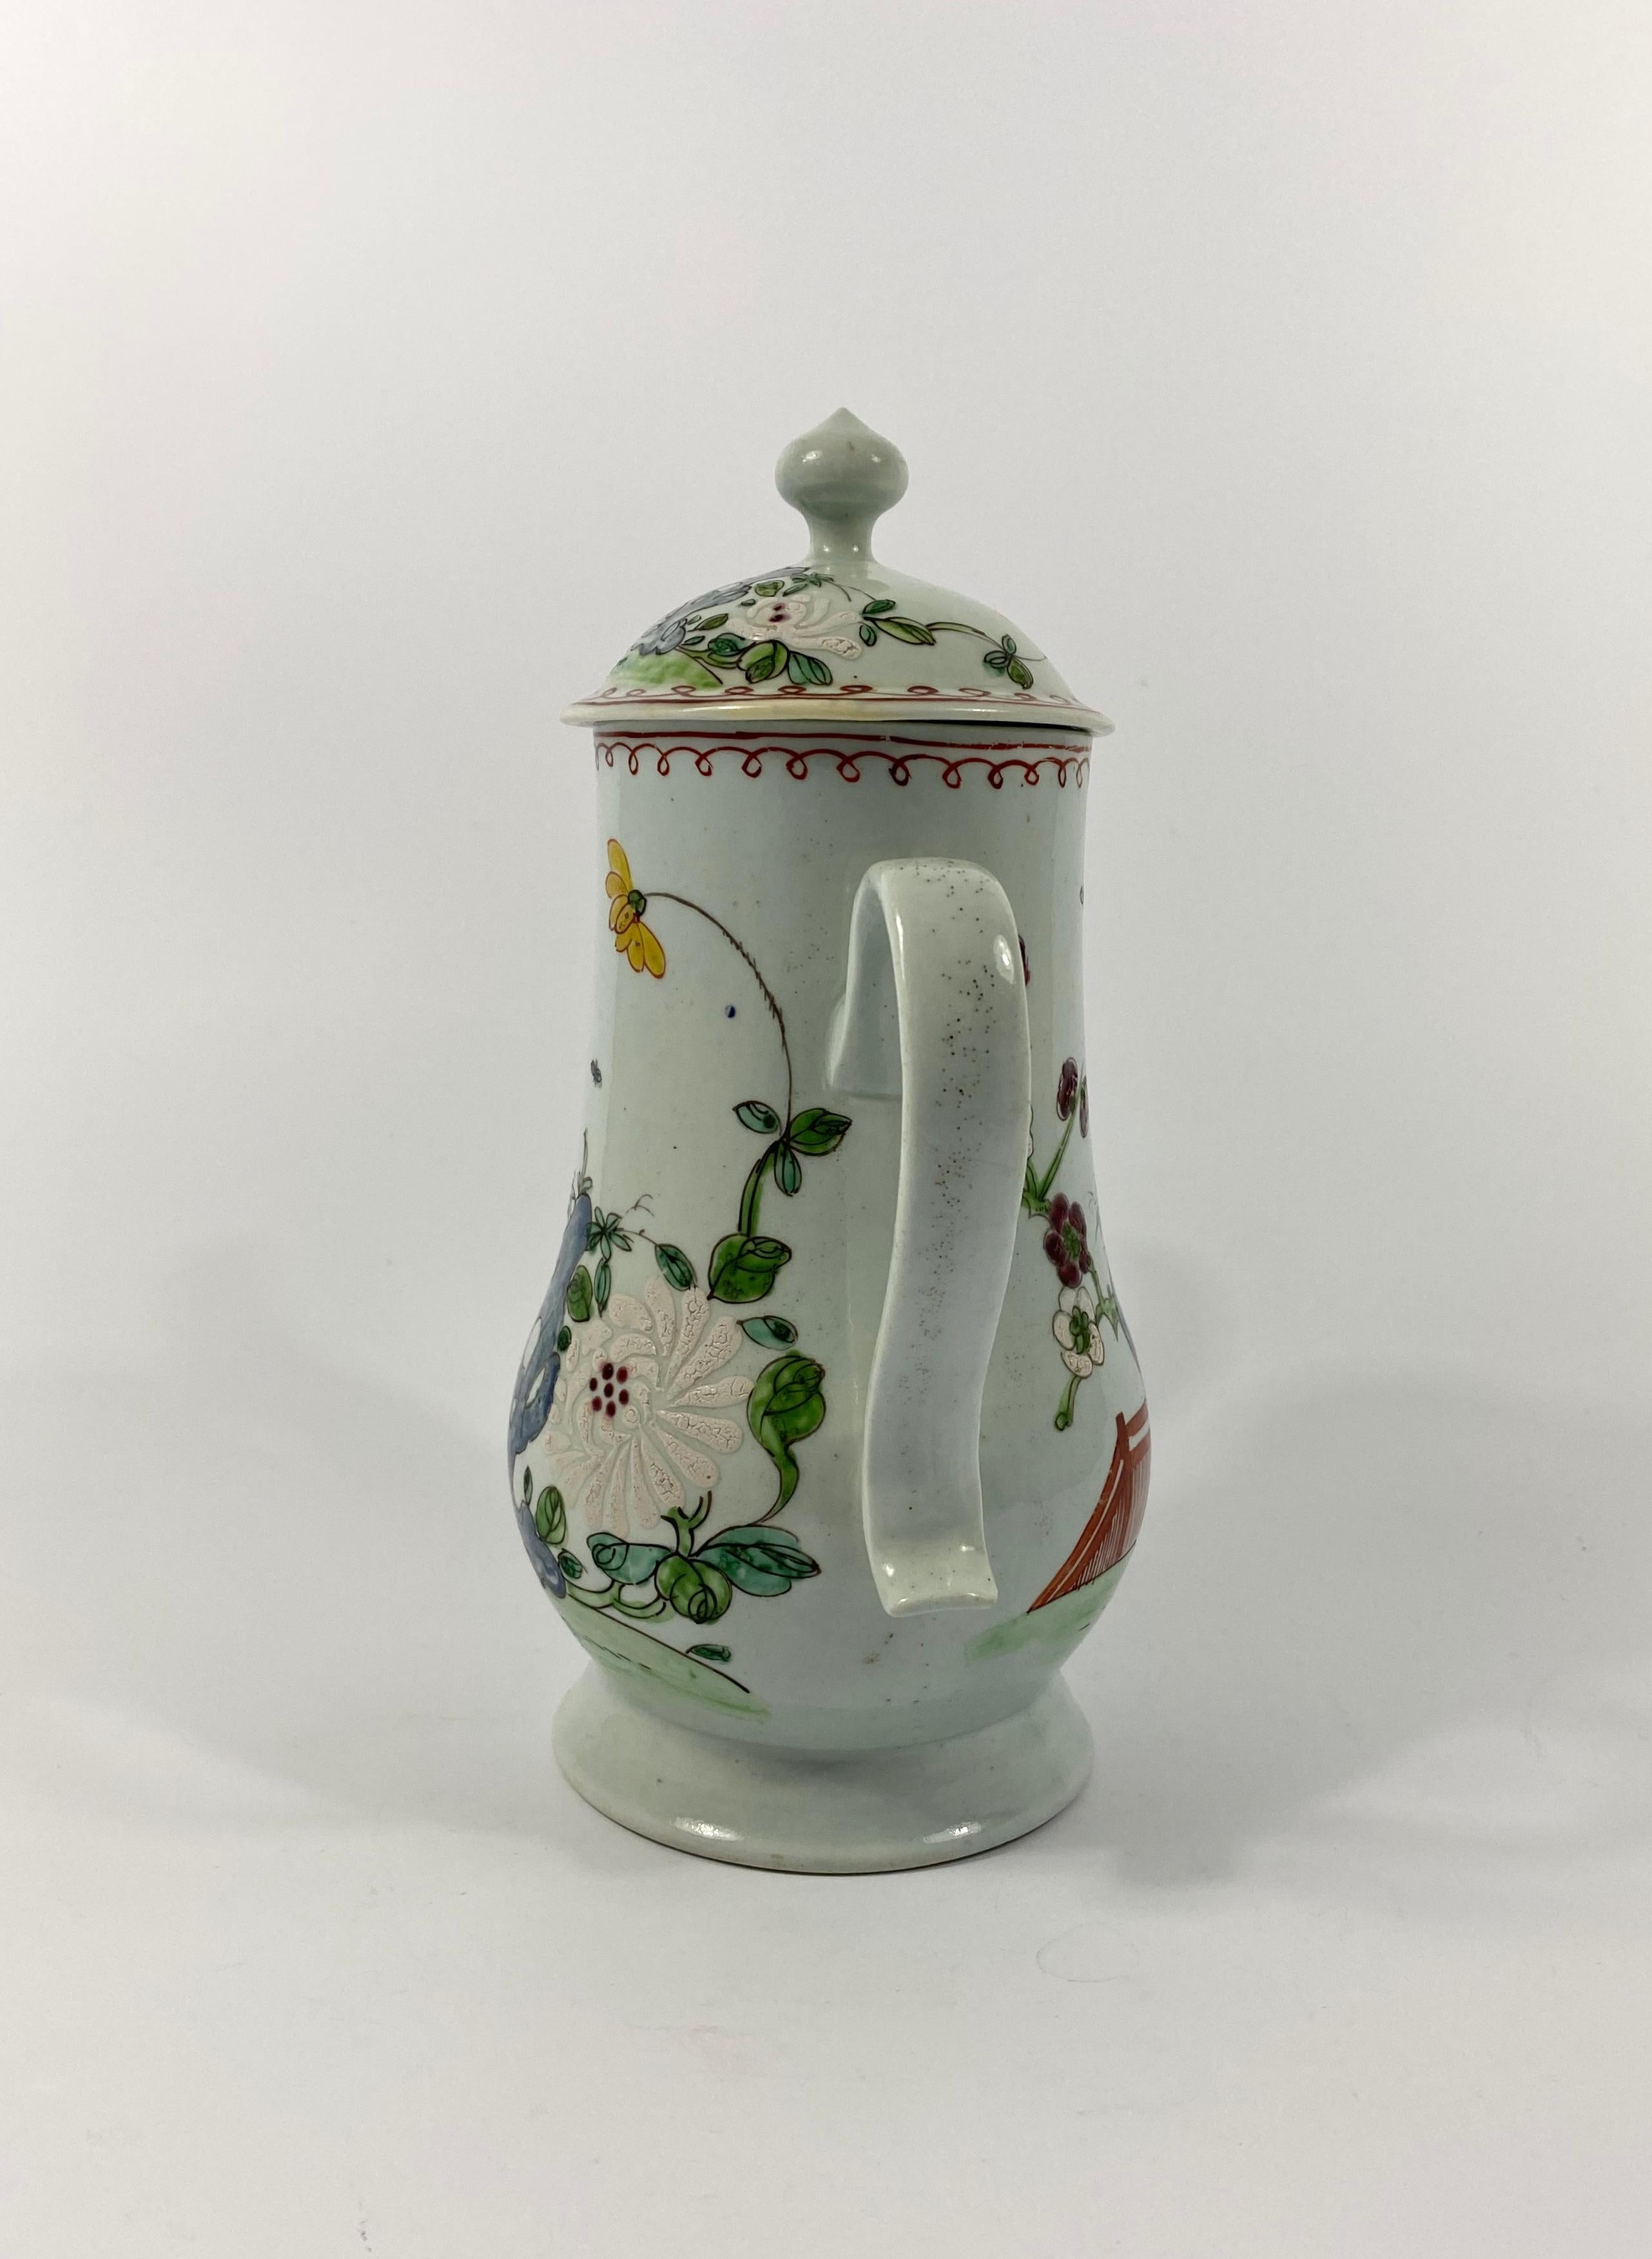 Fired Richard Chaffers, Liverpool Porcelain Coffee Pot, circa 1758